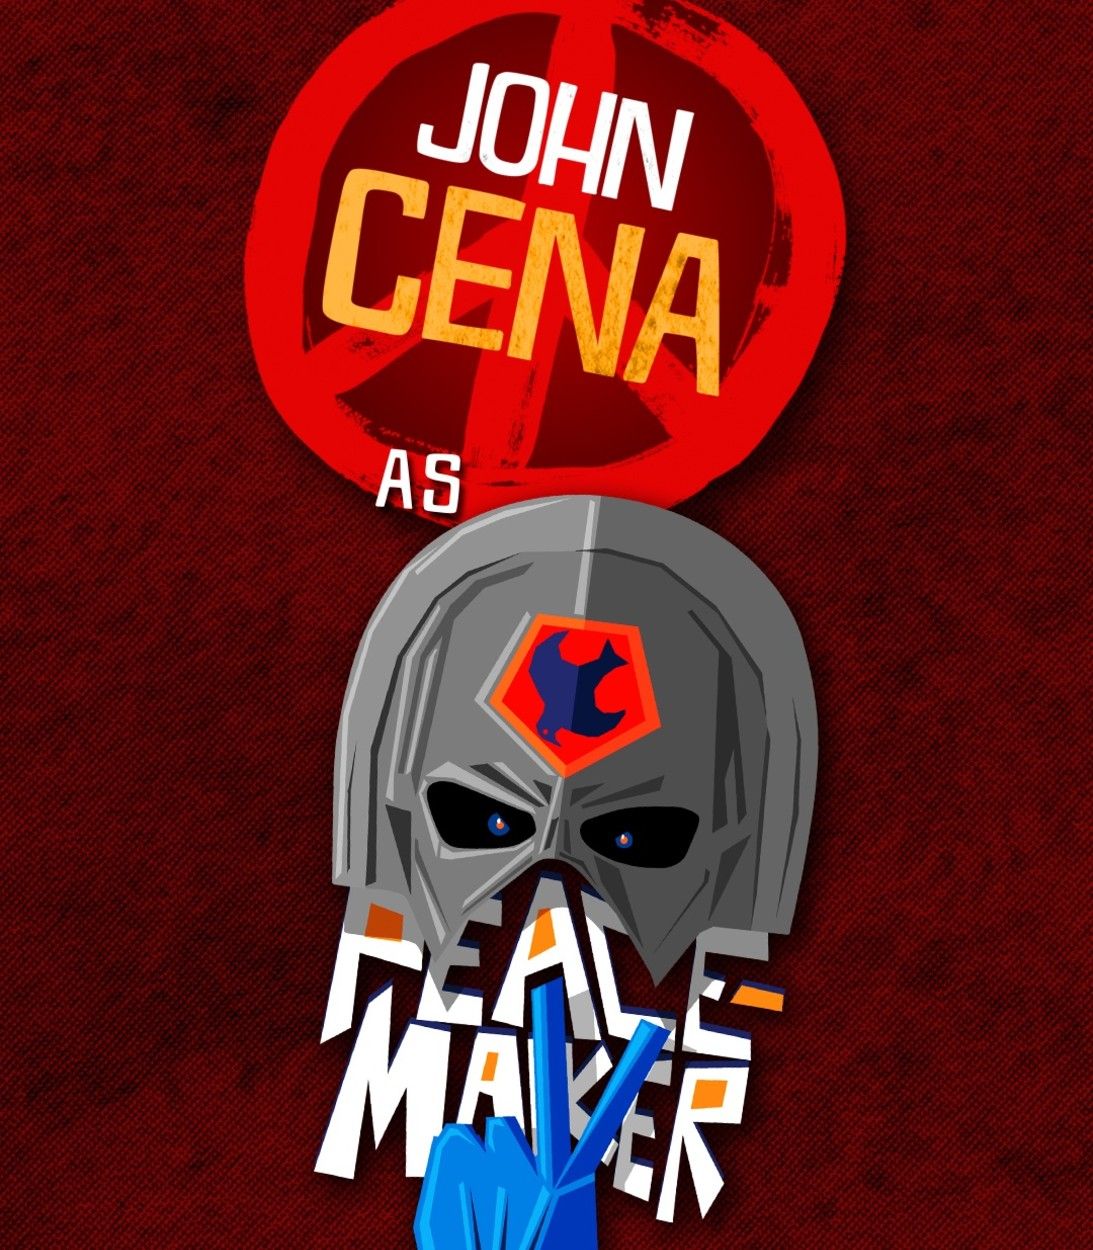 John Cena as Peacemaker in Suicide Squad